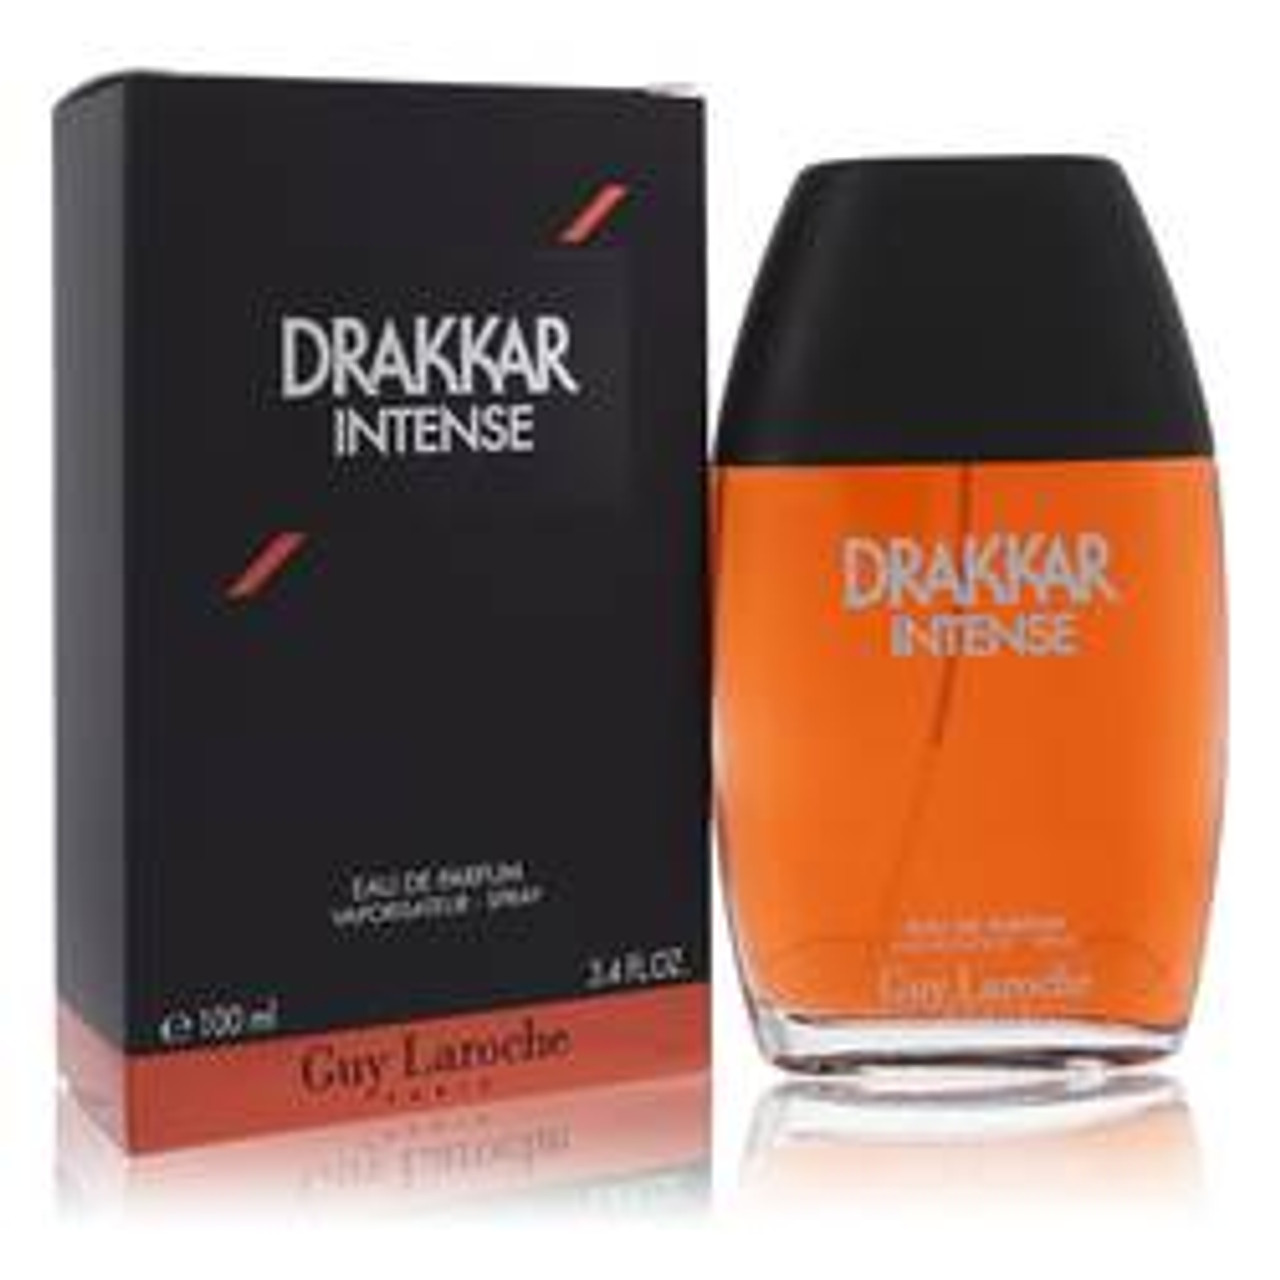 Drakkar Intense Cologne By Guy Laroche Eau De Parfum Spray 3.4 oz for Men - [From 63.00 - Choose pk Qty ] - *Ships from Miami